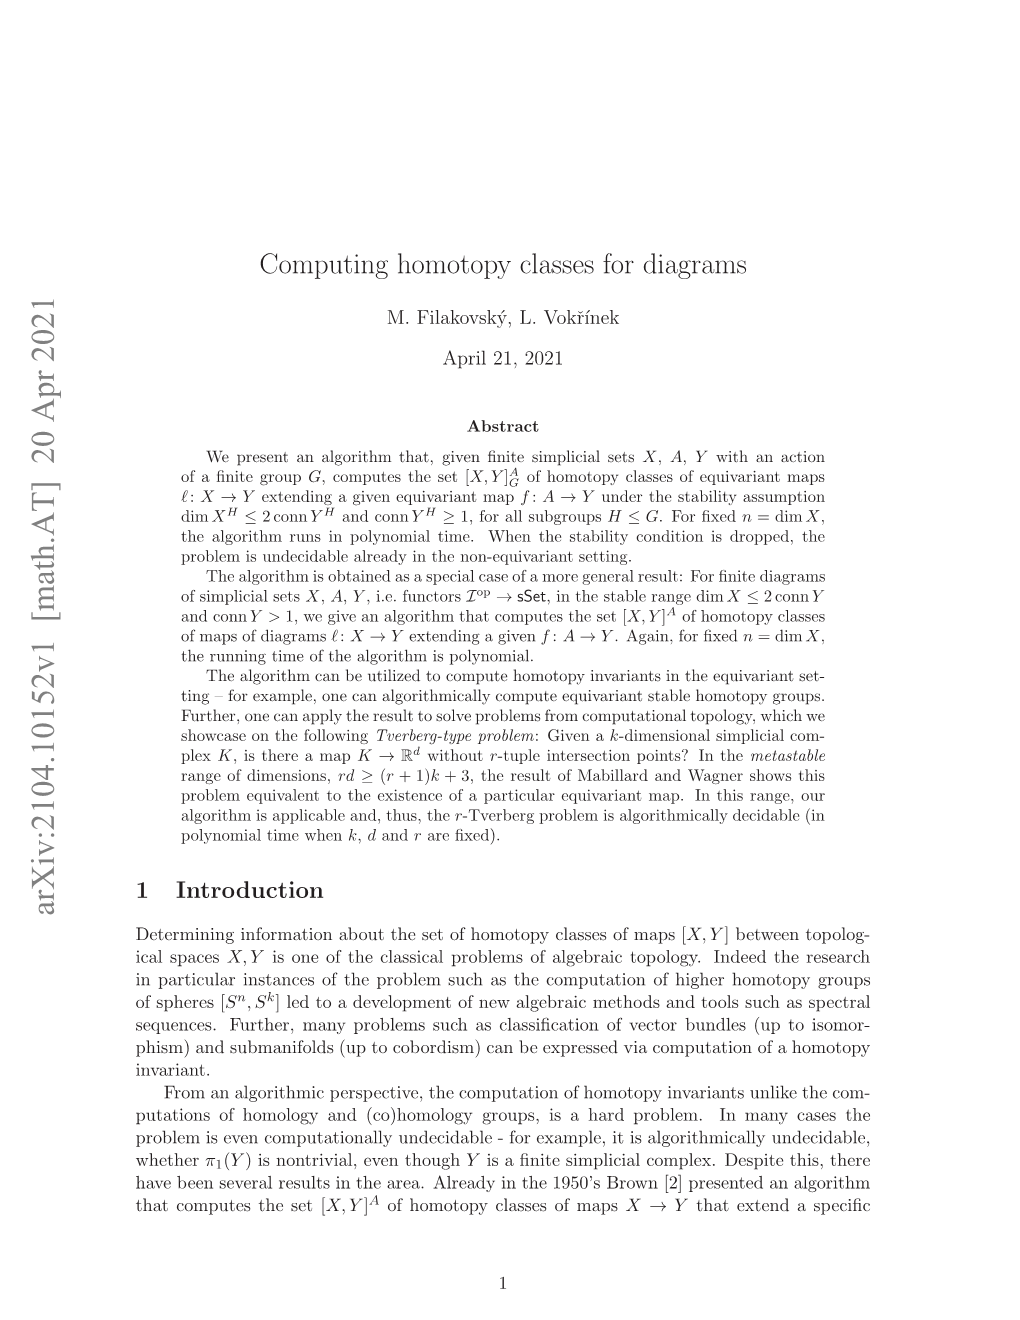 Computing Homotopy Classes for Diagrams